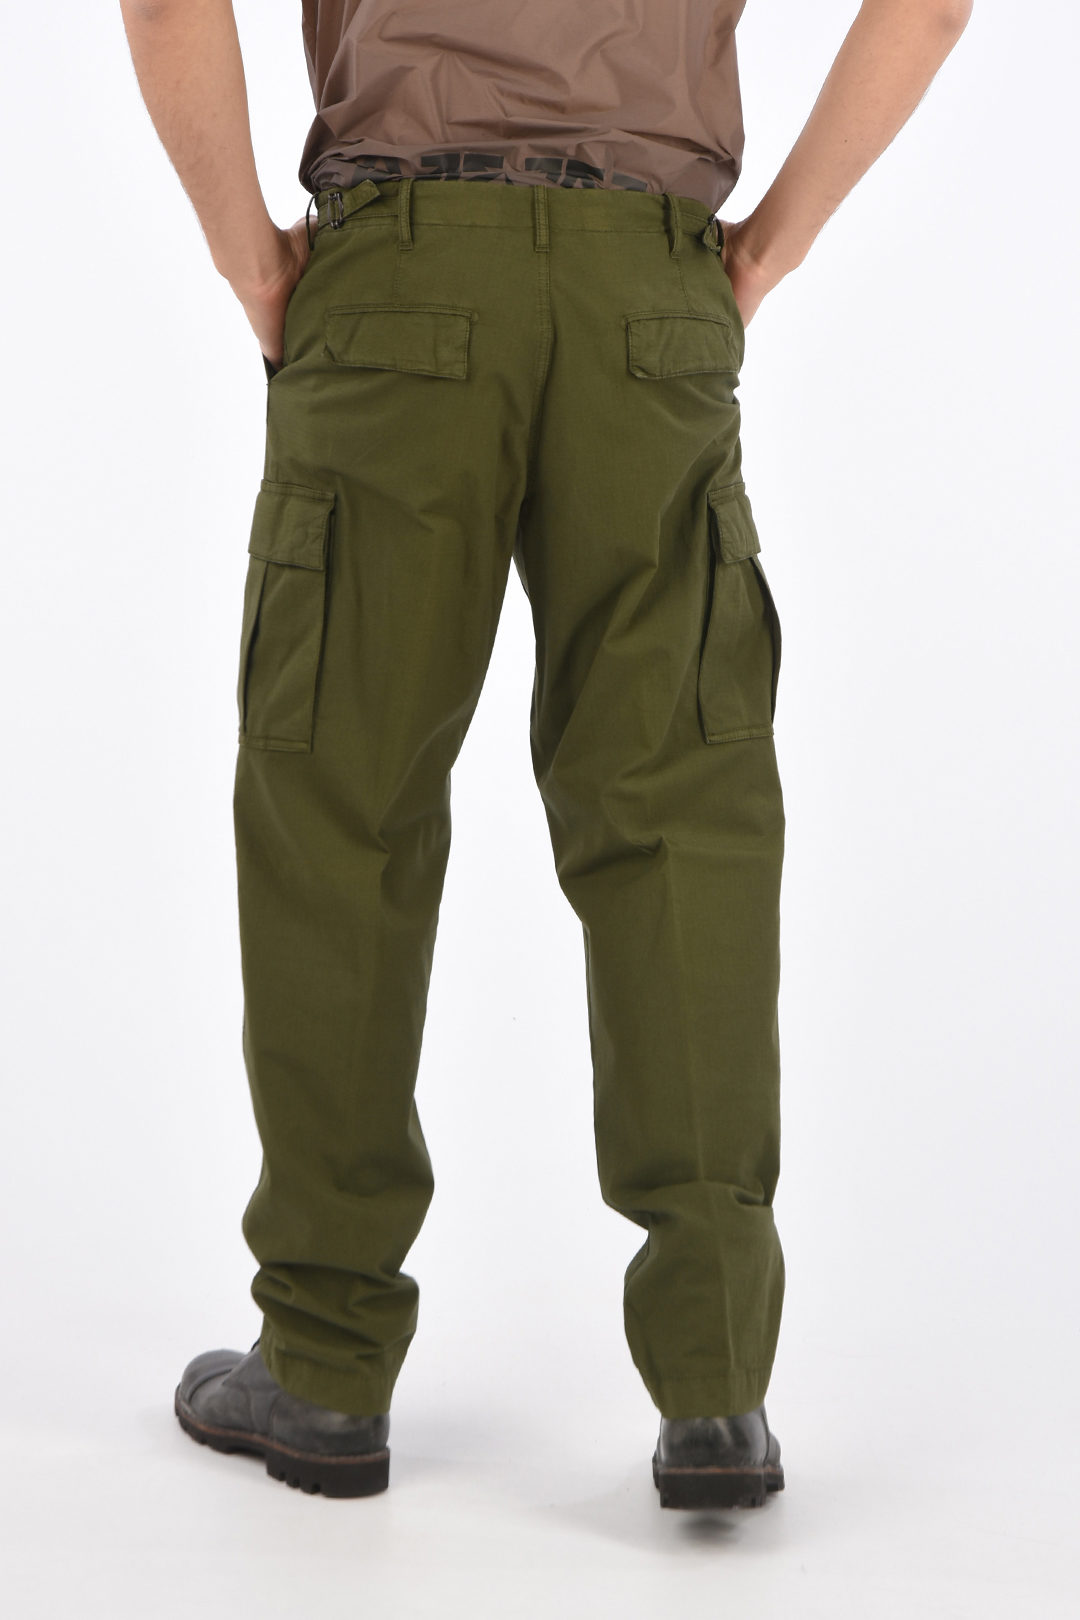 Berwich Wide cargo pants men - Glamood Outlet